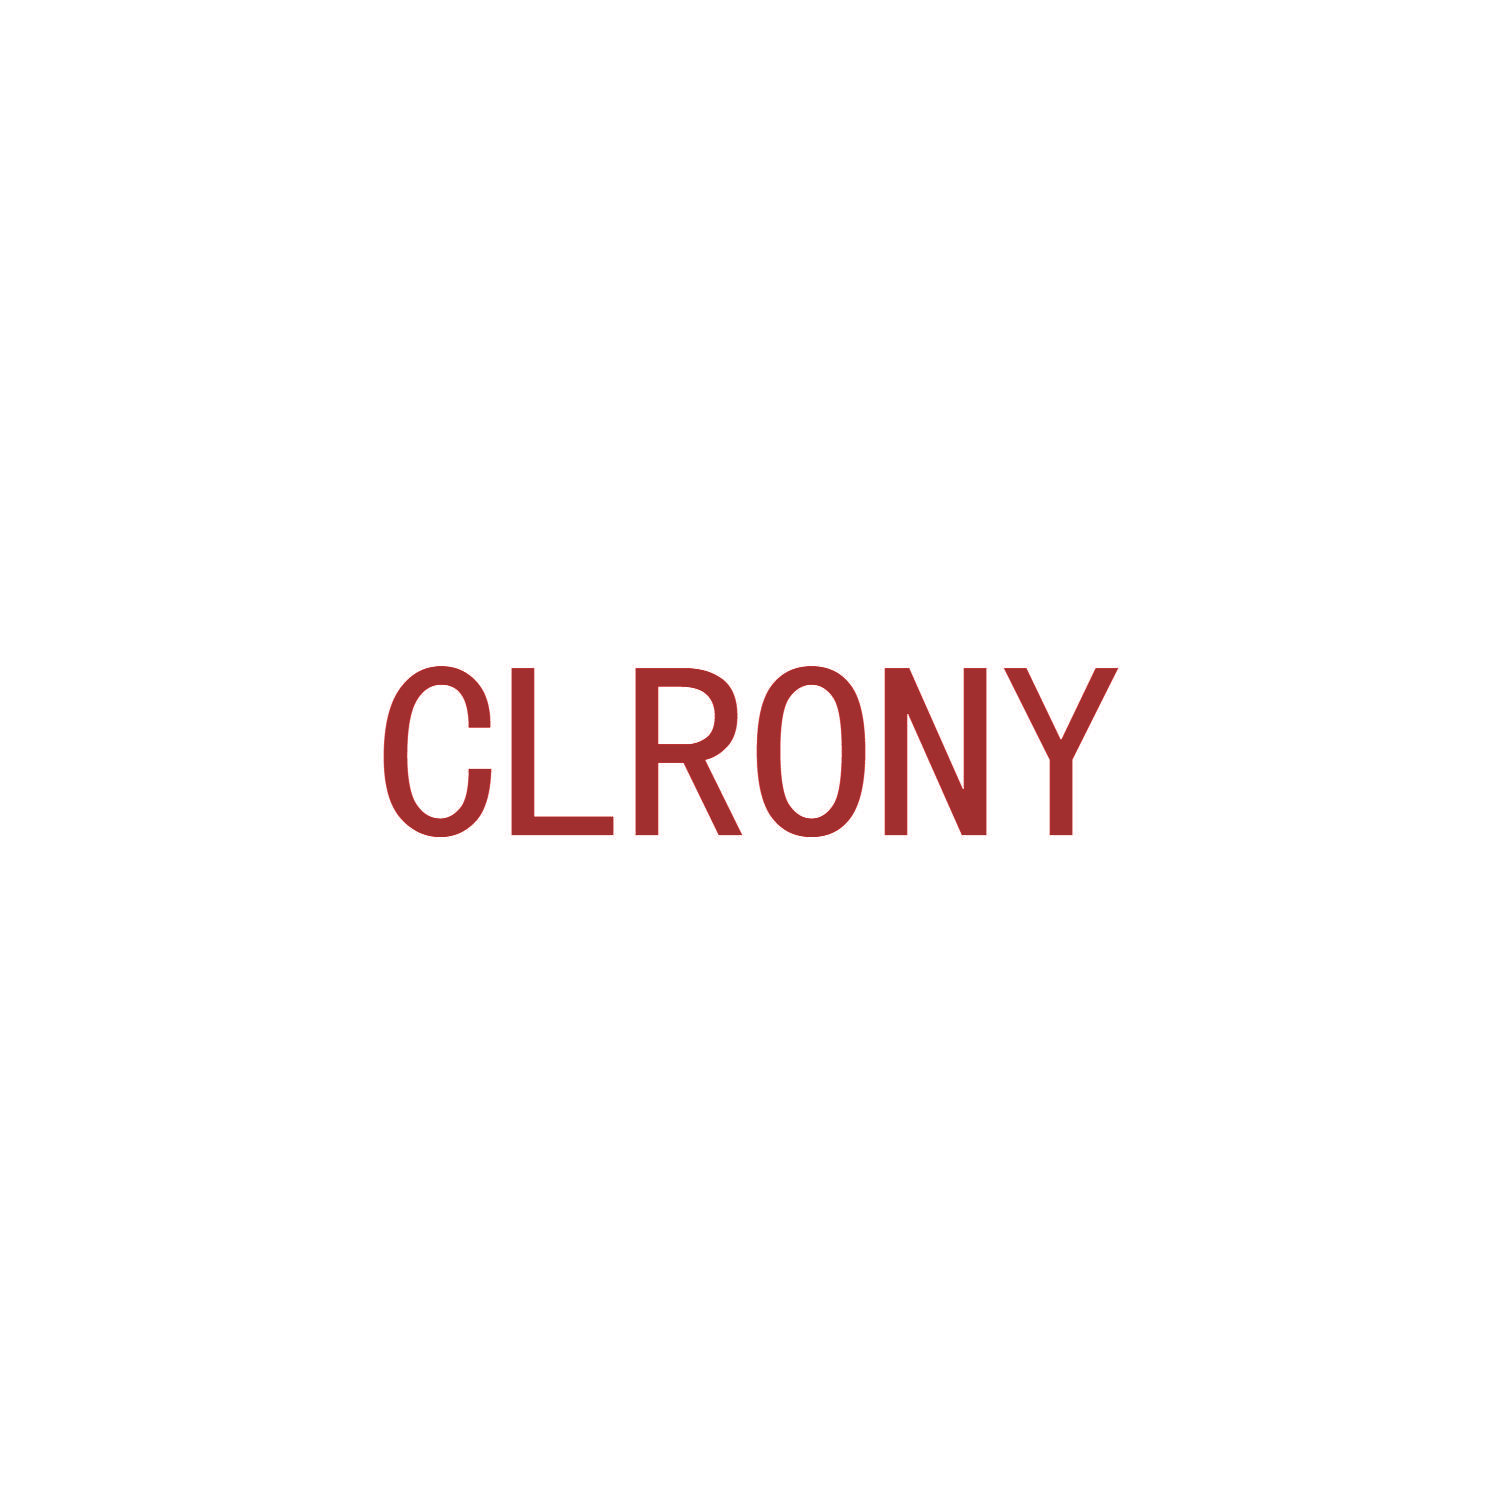 CLRONY